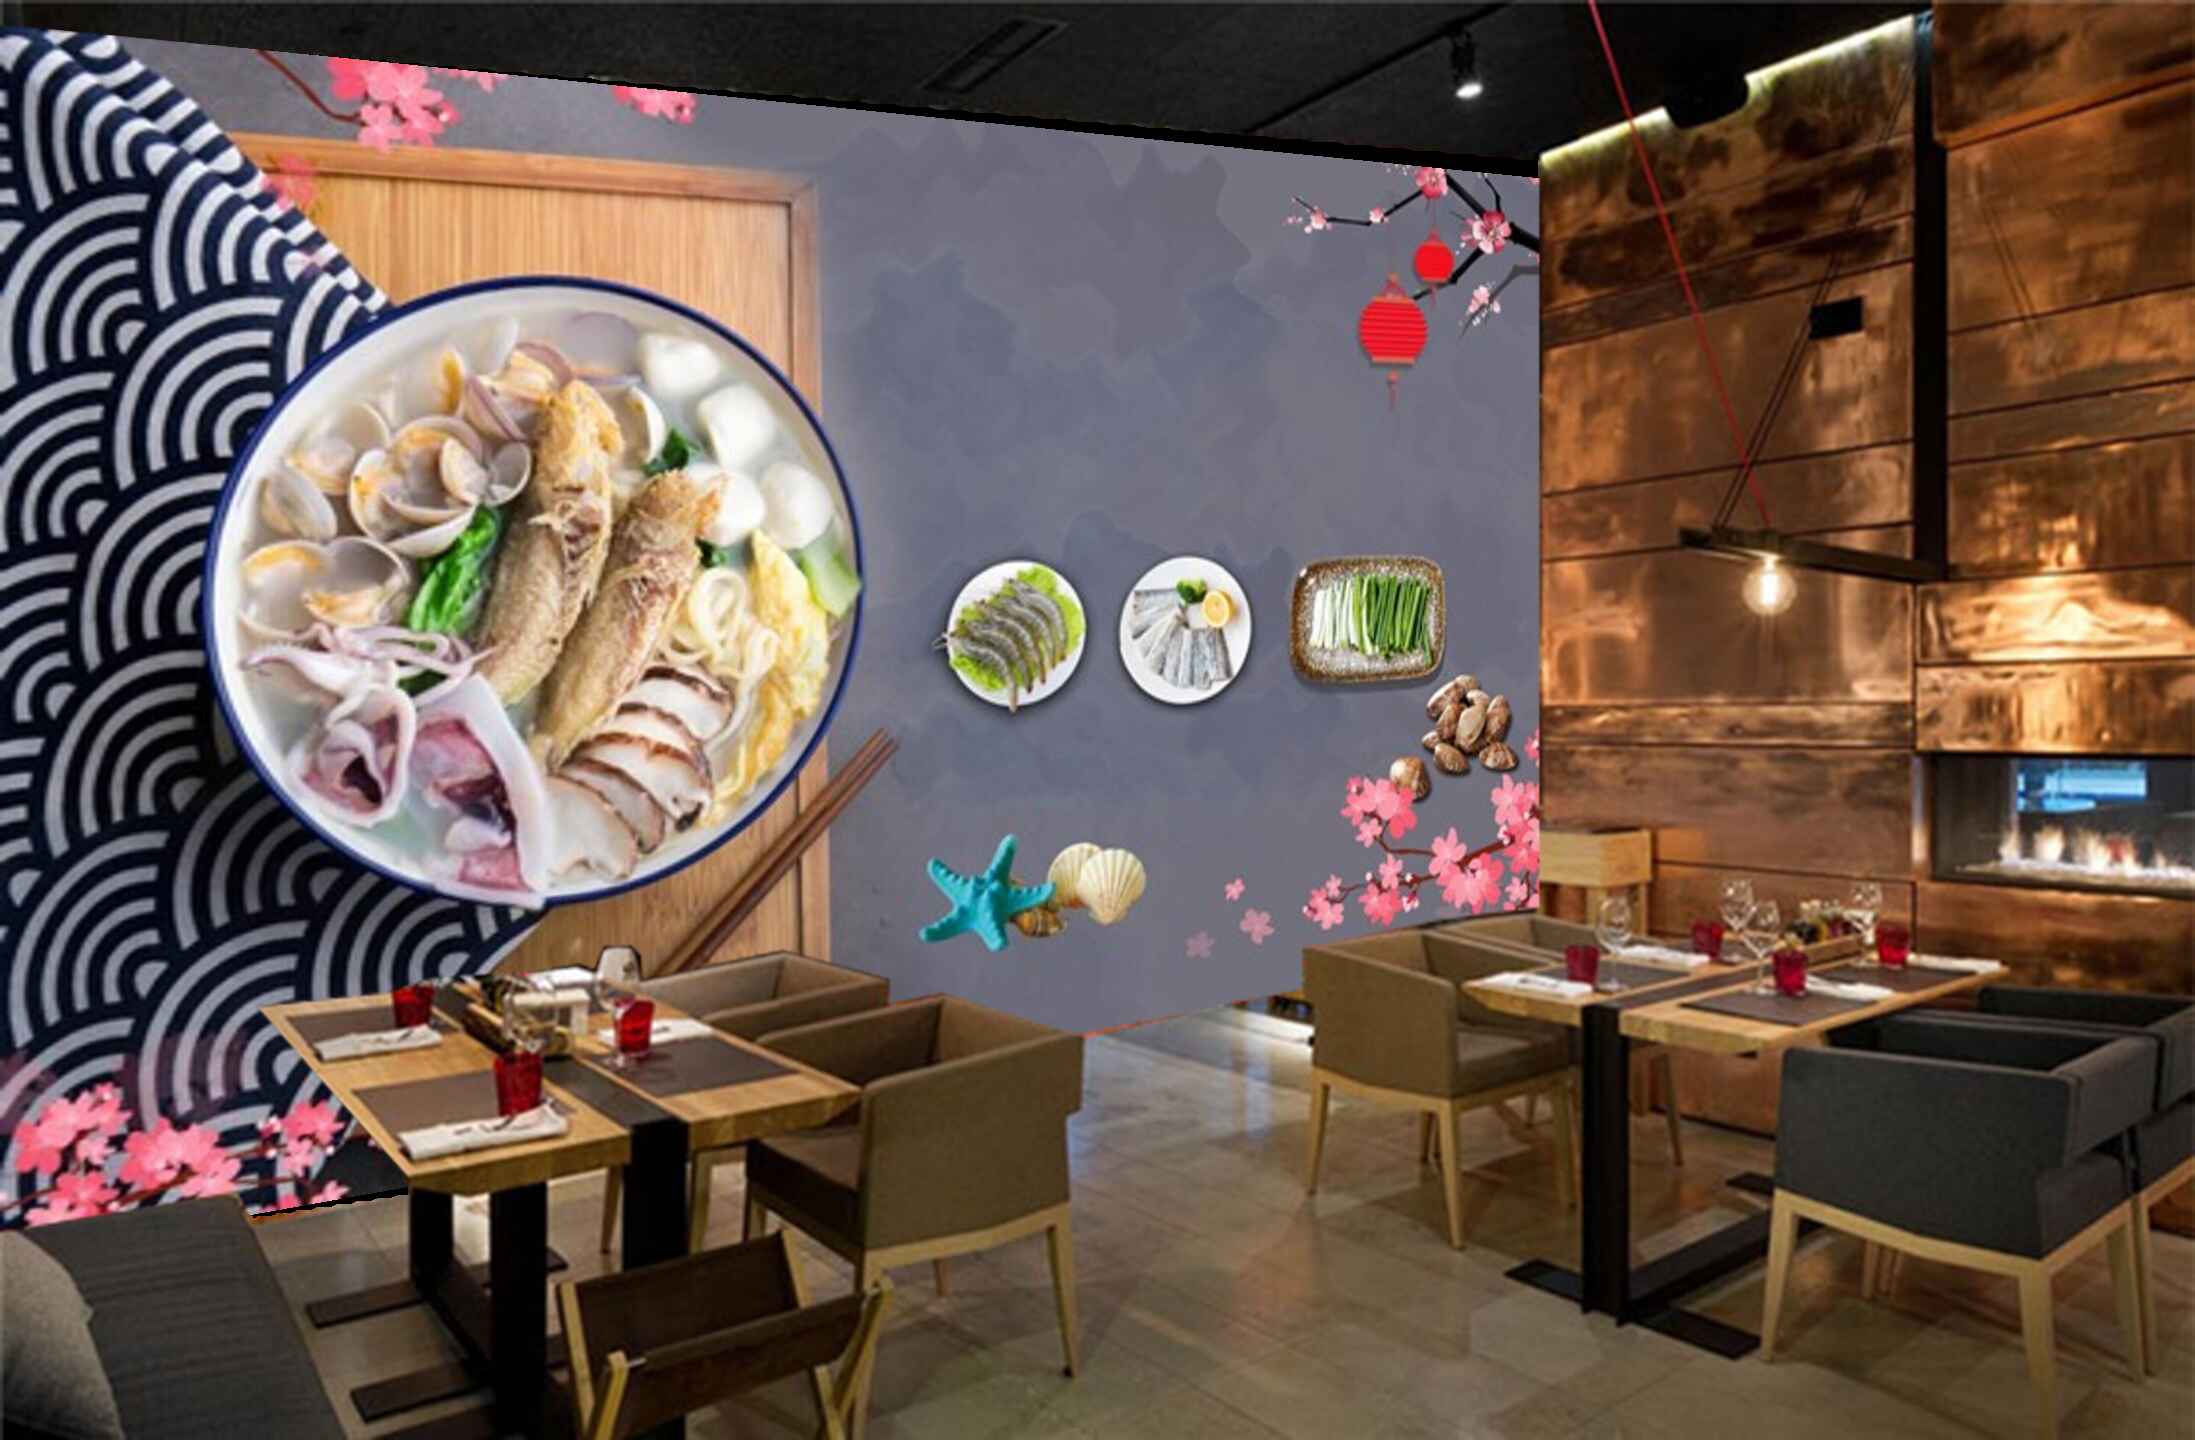 Avikalp MWZ3145 Meat Stones Flowers Wooden Board HD Wallpaper for Cafe Restaurant